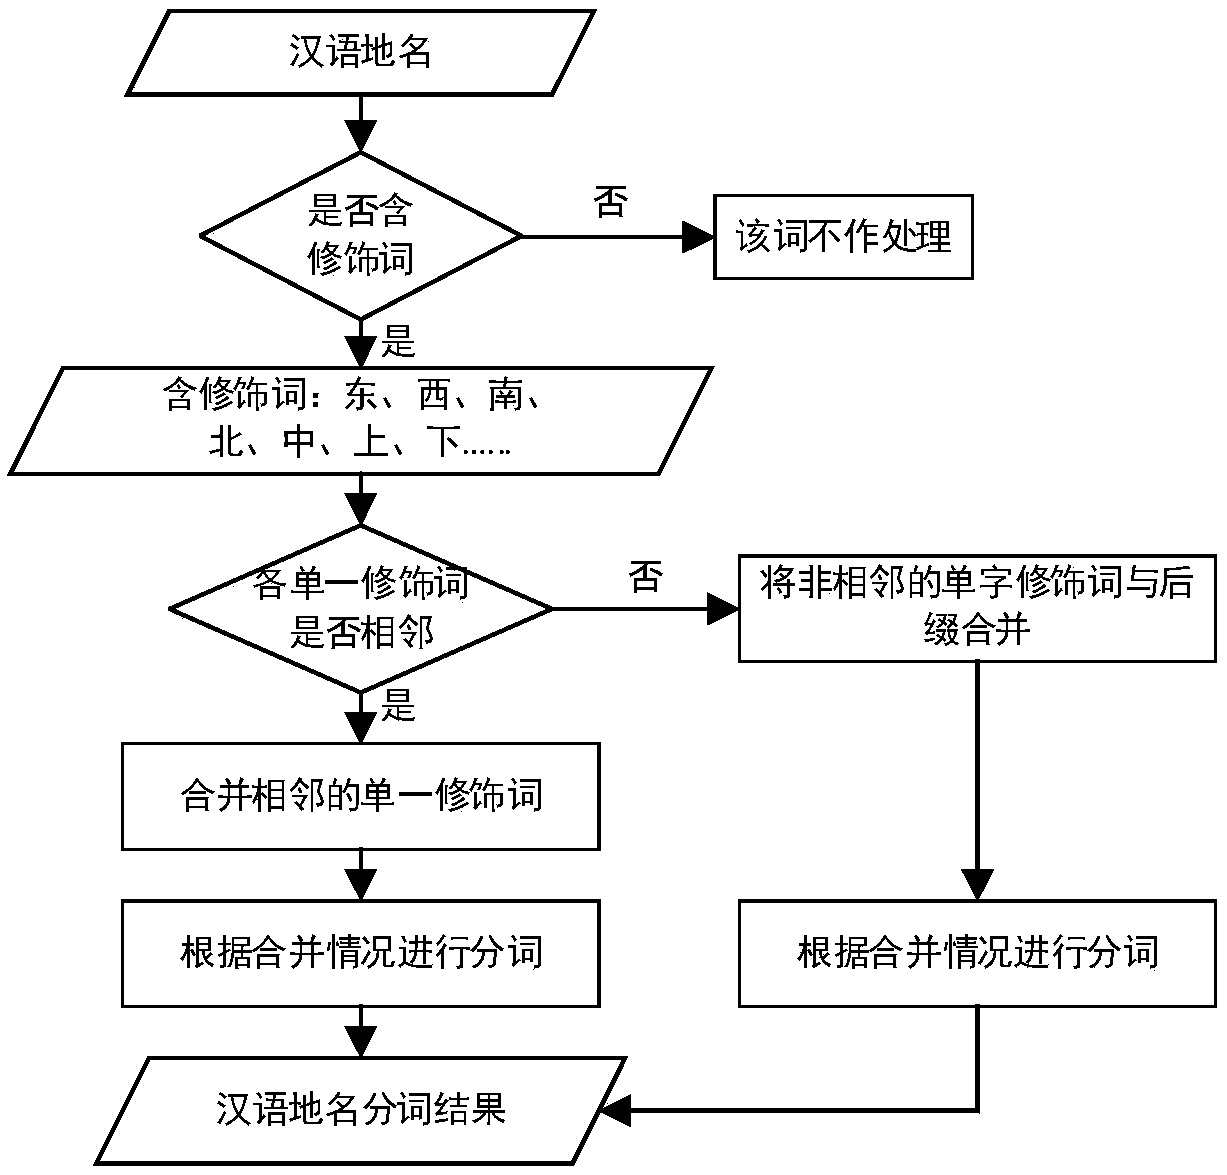 Chinese place name phonetic spelling standardization method